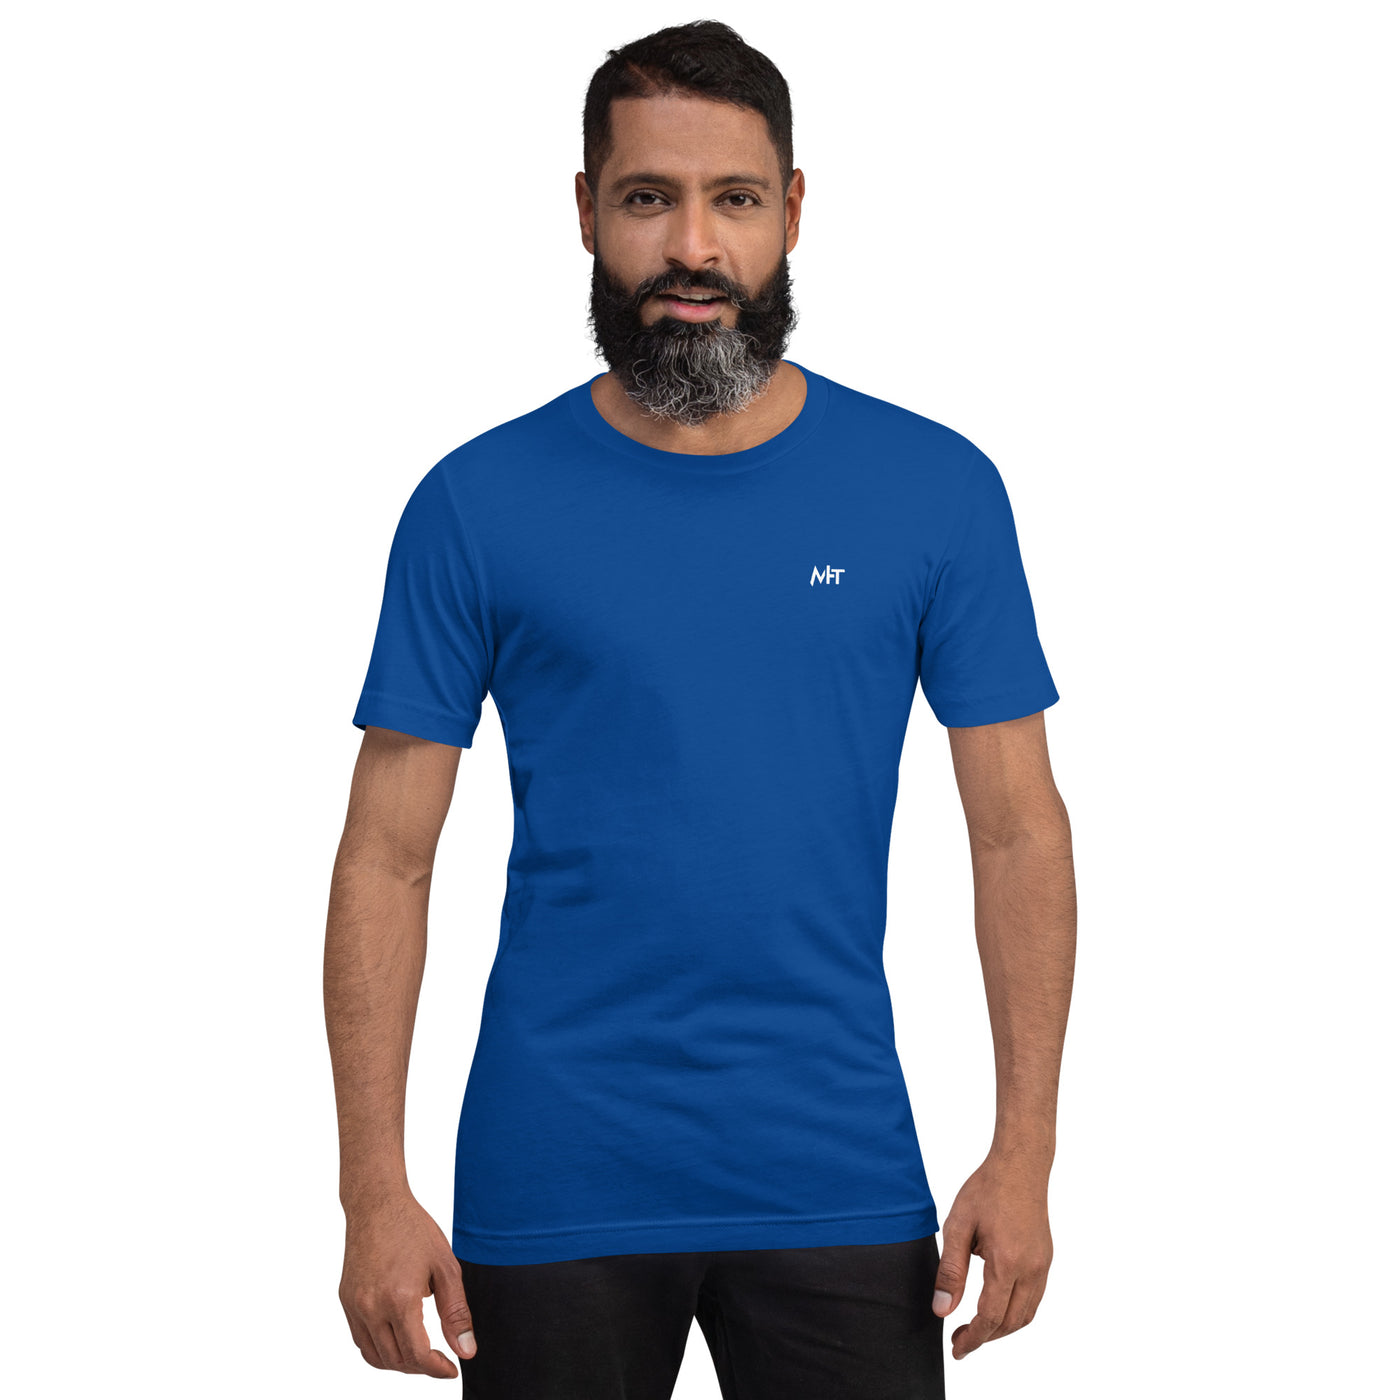 Software is Like Sex - Unisex t-shirt ( Back Print )